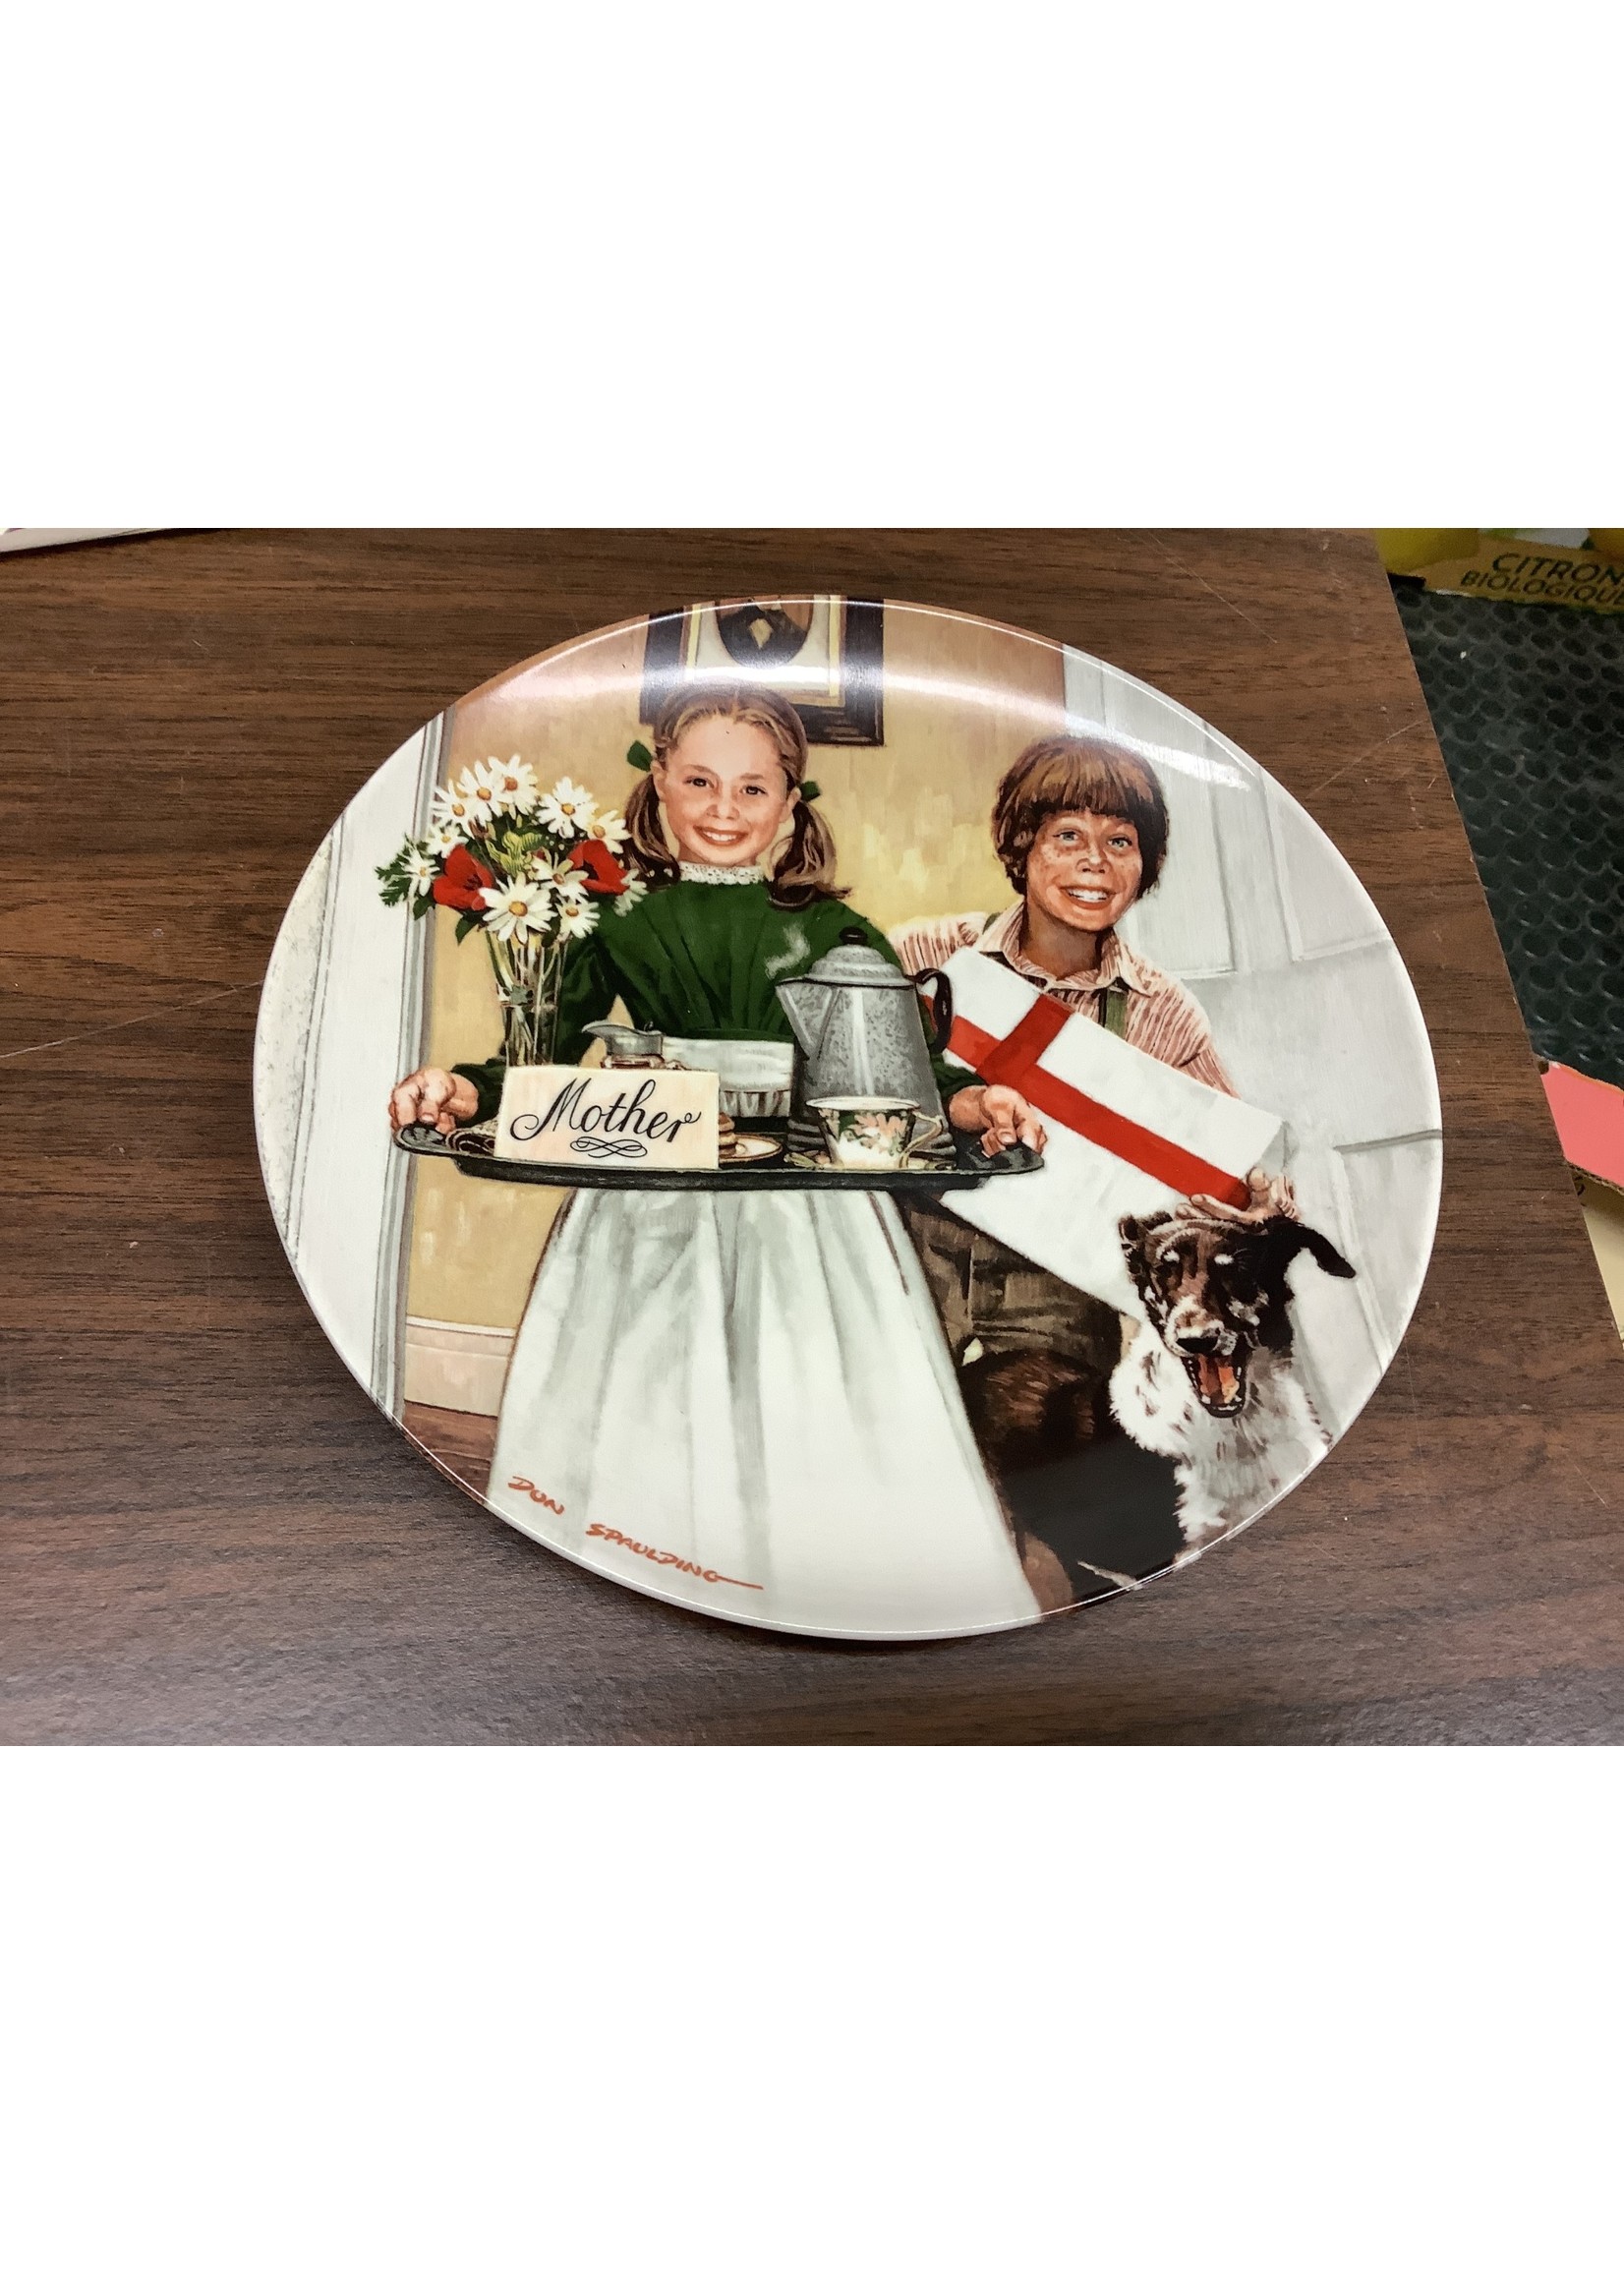 The Bradford Exchange Collectors Plate “Mother’s Day” Bradex-No. 84-K41-2.7